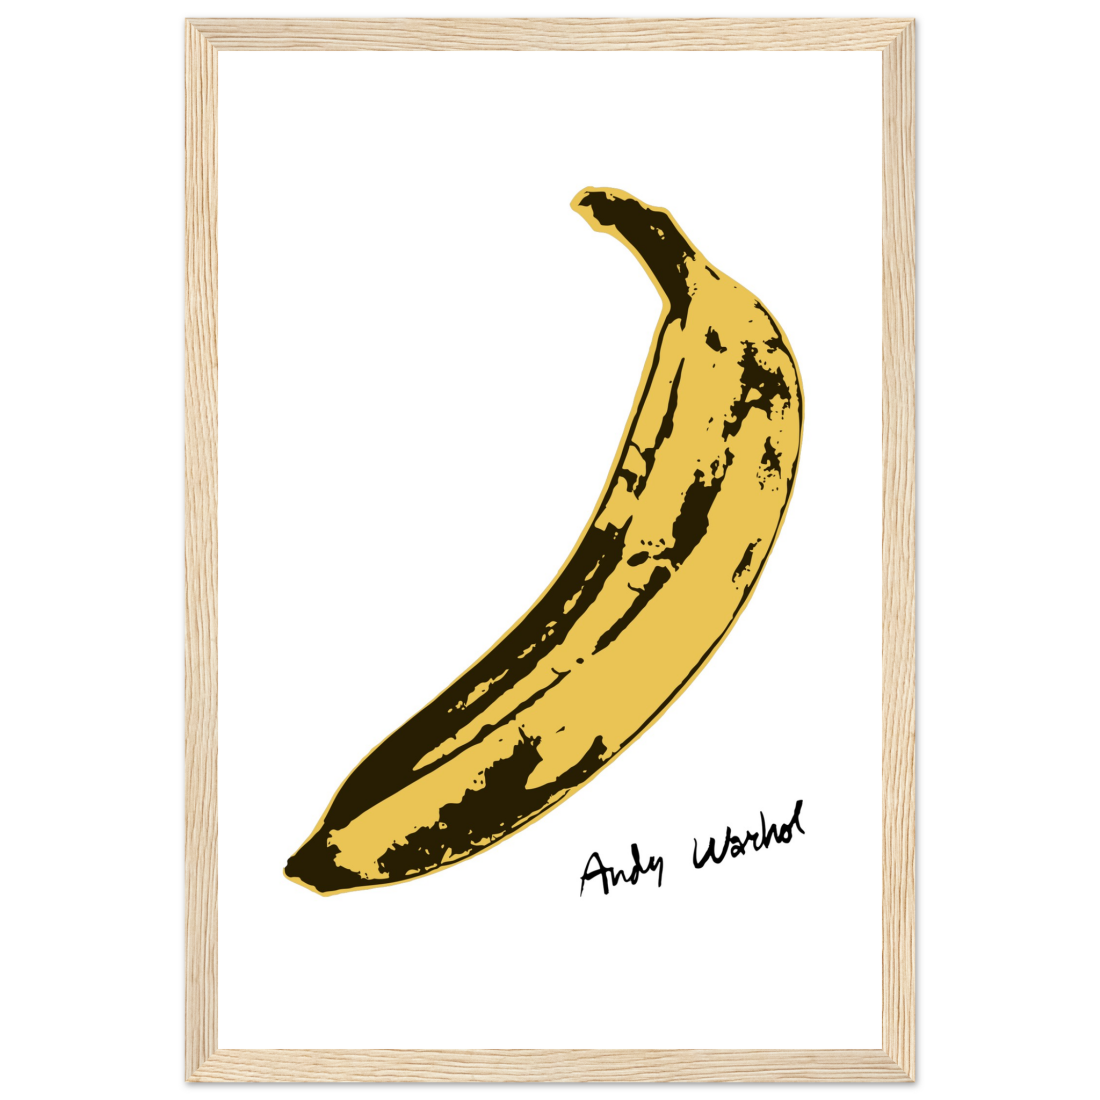 Andy Warhol's Banana, 1967 Pop Art Poster-4